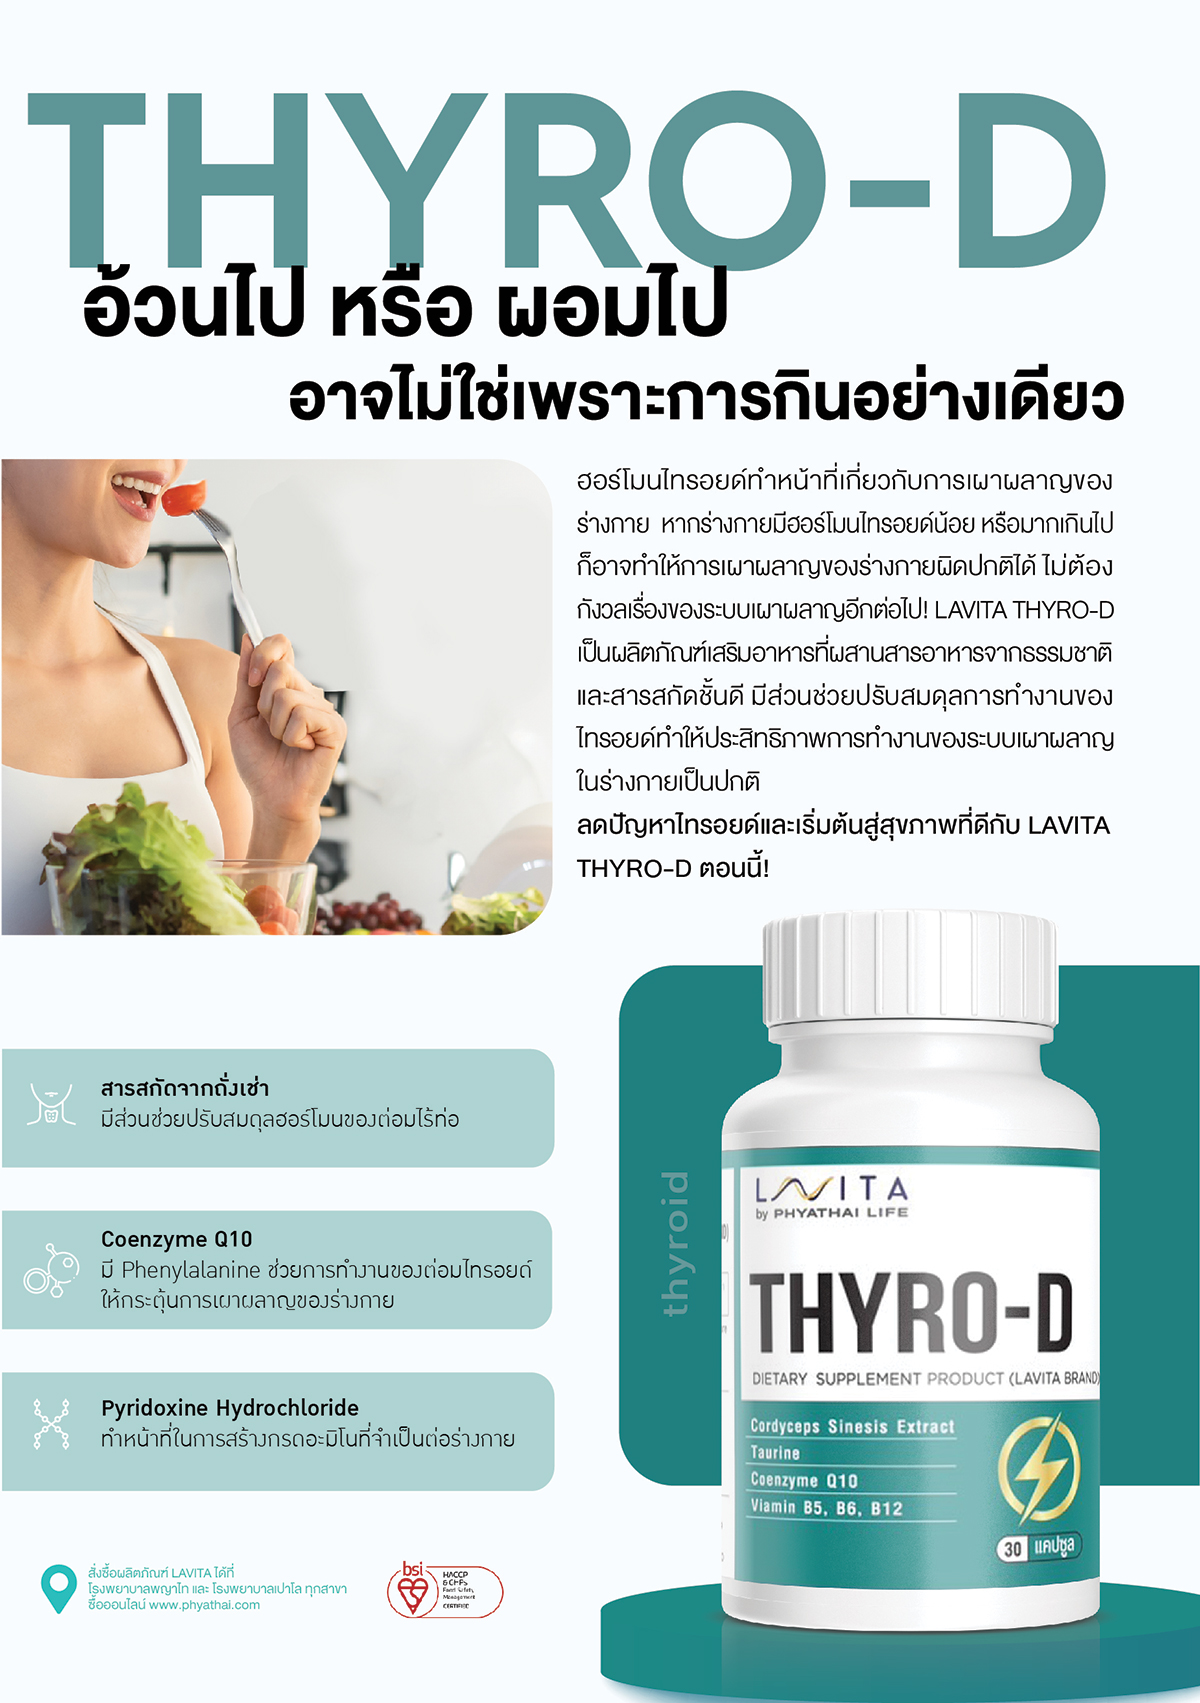 THYRO-D มีส่วนช่วยในการสร้างฮอร์โมนไทรอยด์และการทำงานของระบบเมตาบอลิซึมตามปกติ